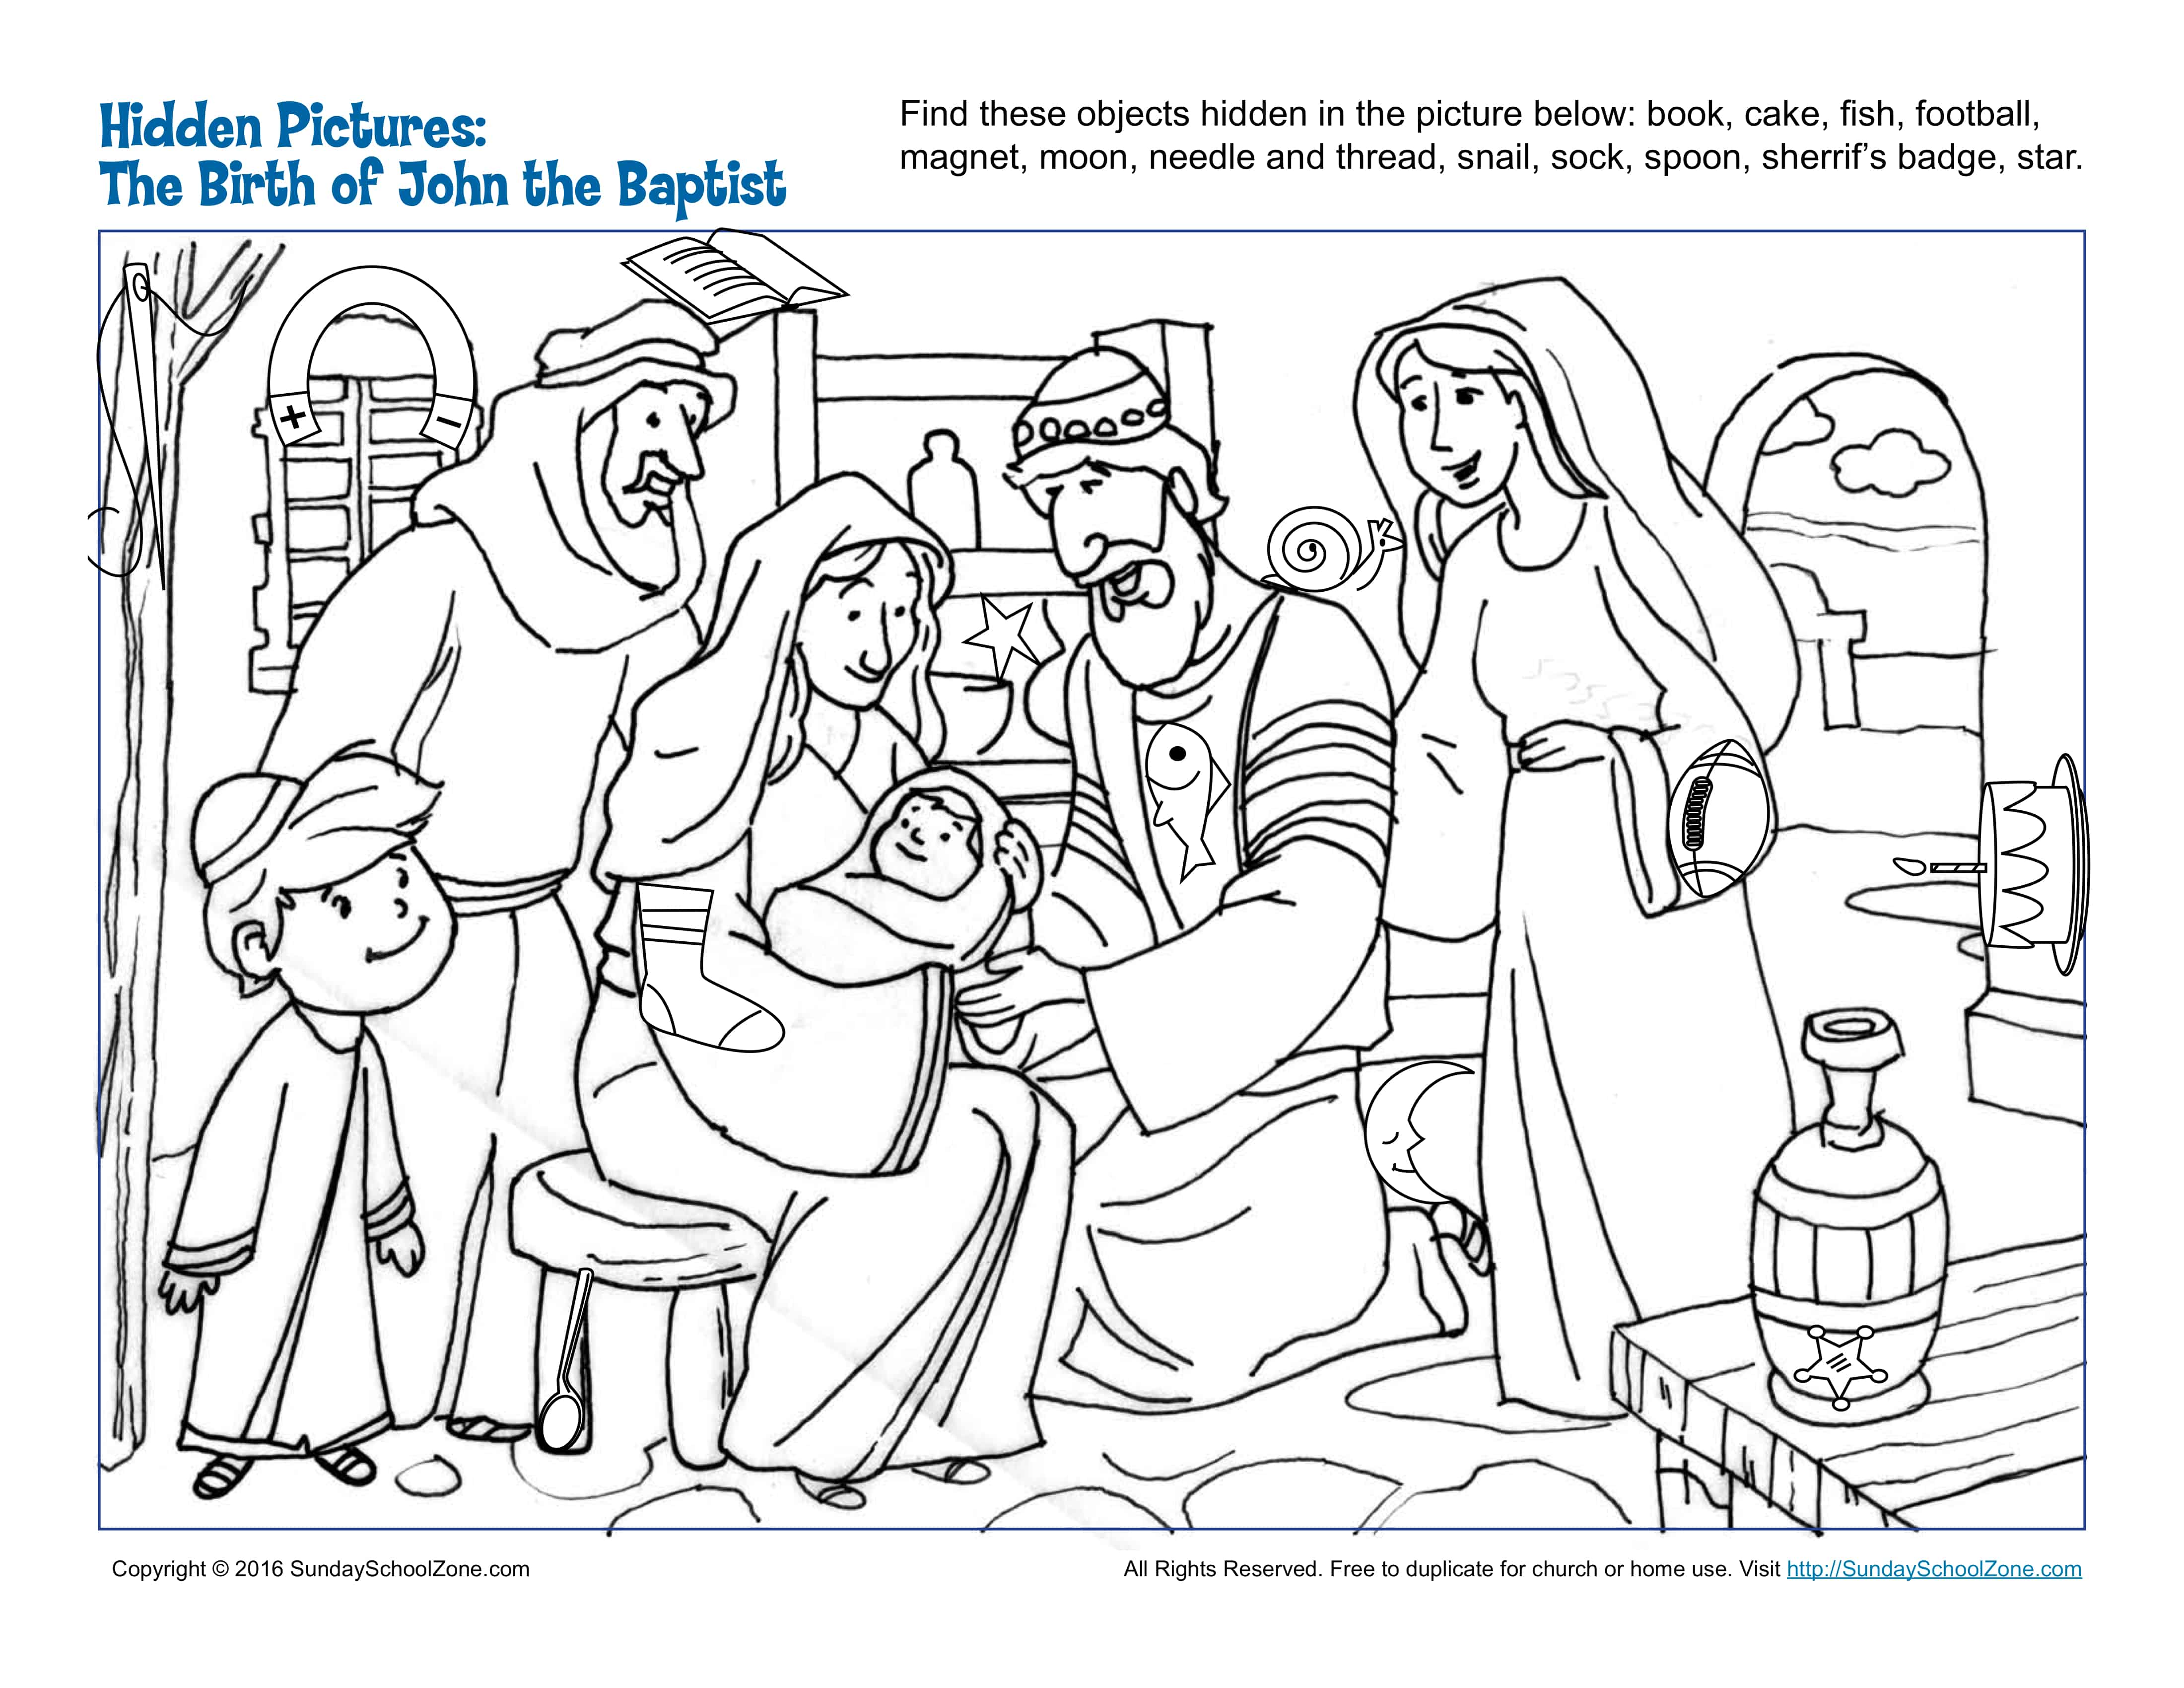 The Birth of John the Baptist Hidden Pictures Children's Bible